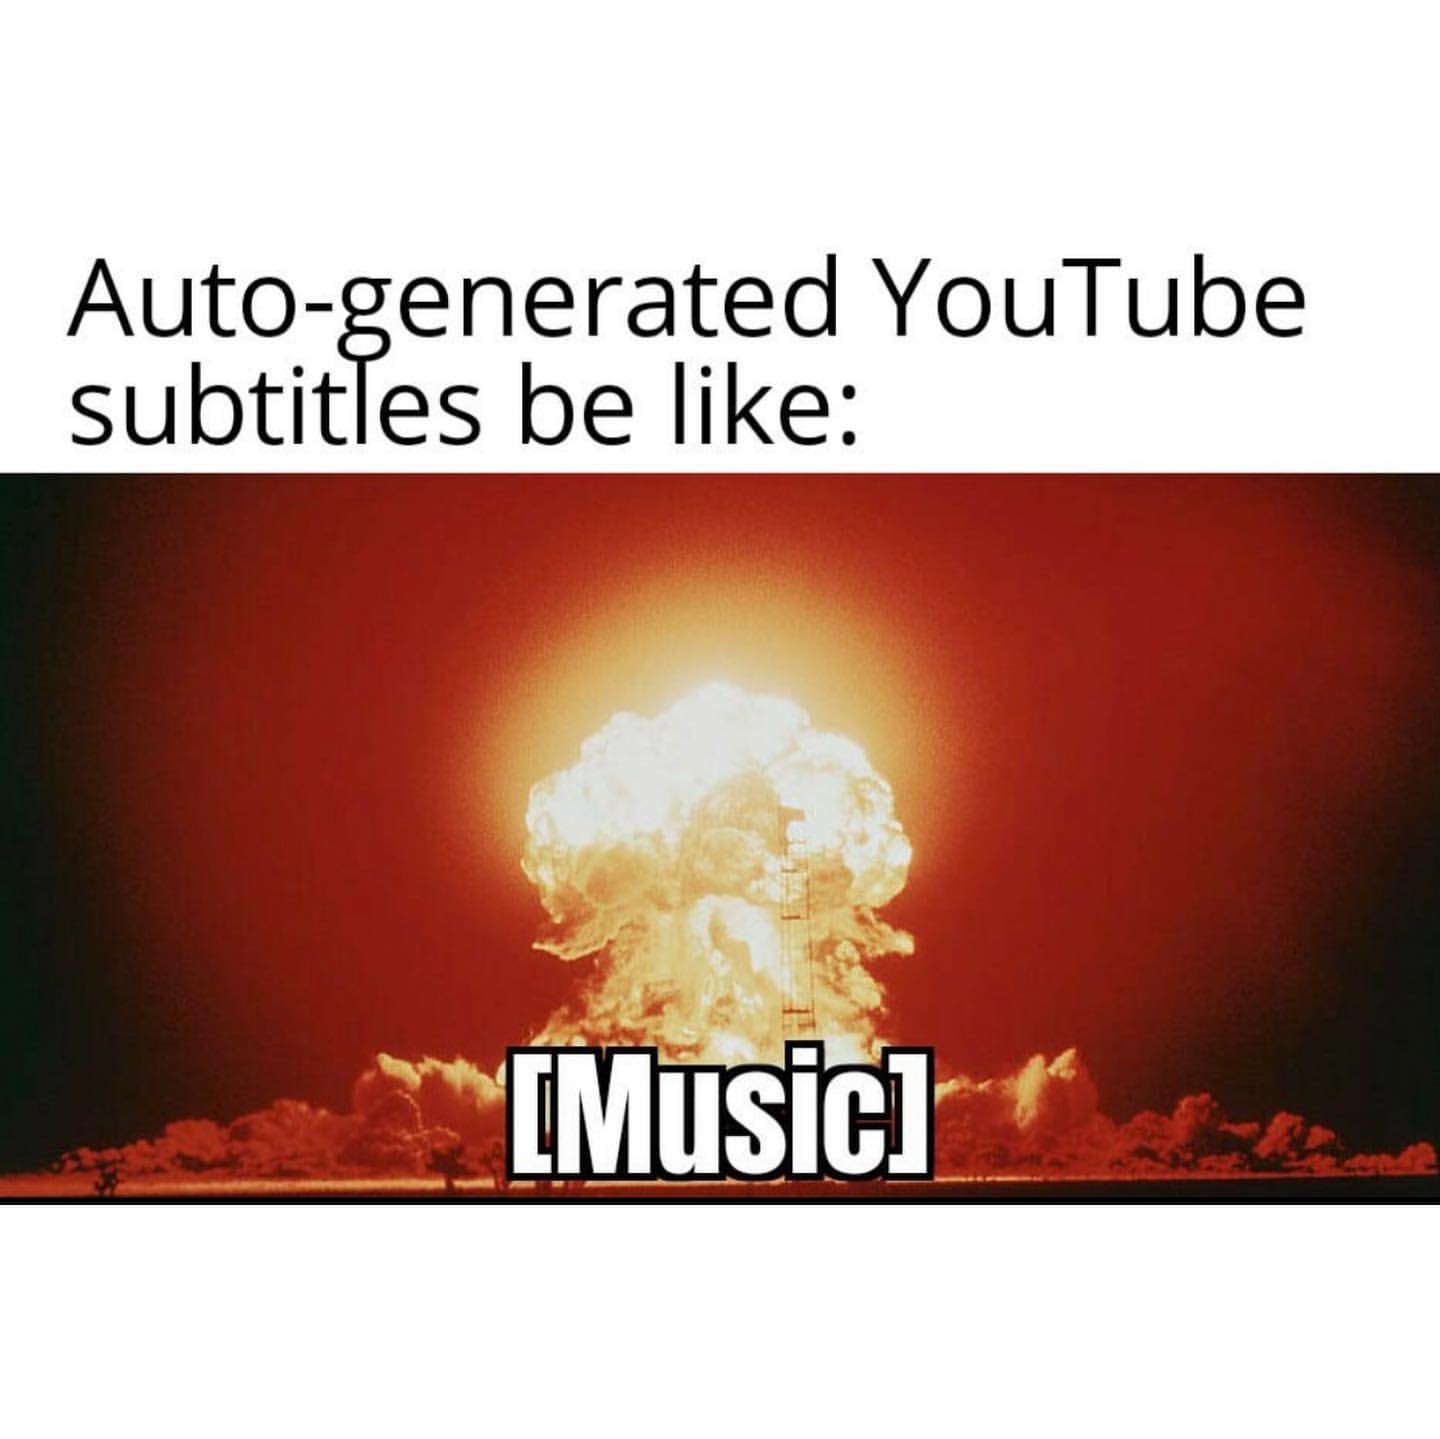 Auto-generated YouTube subtitles be like: [Music]